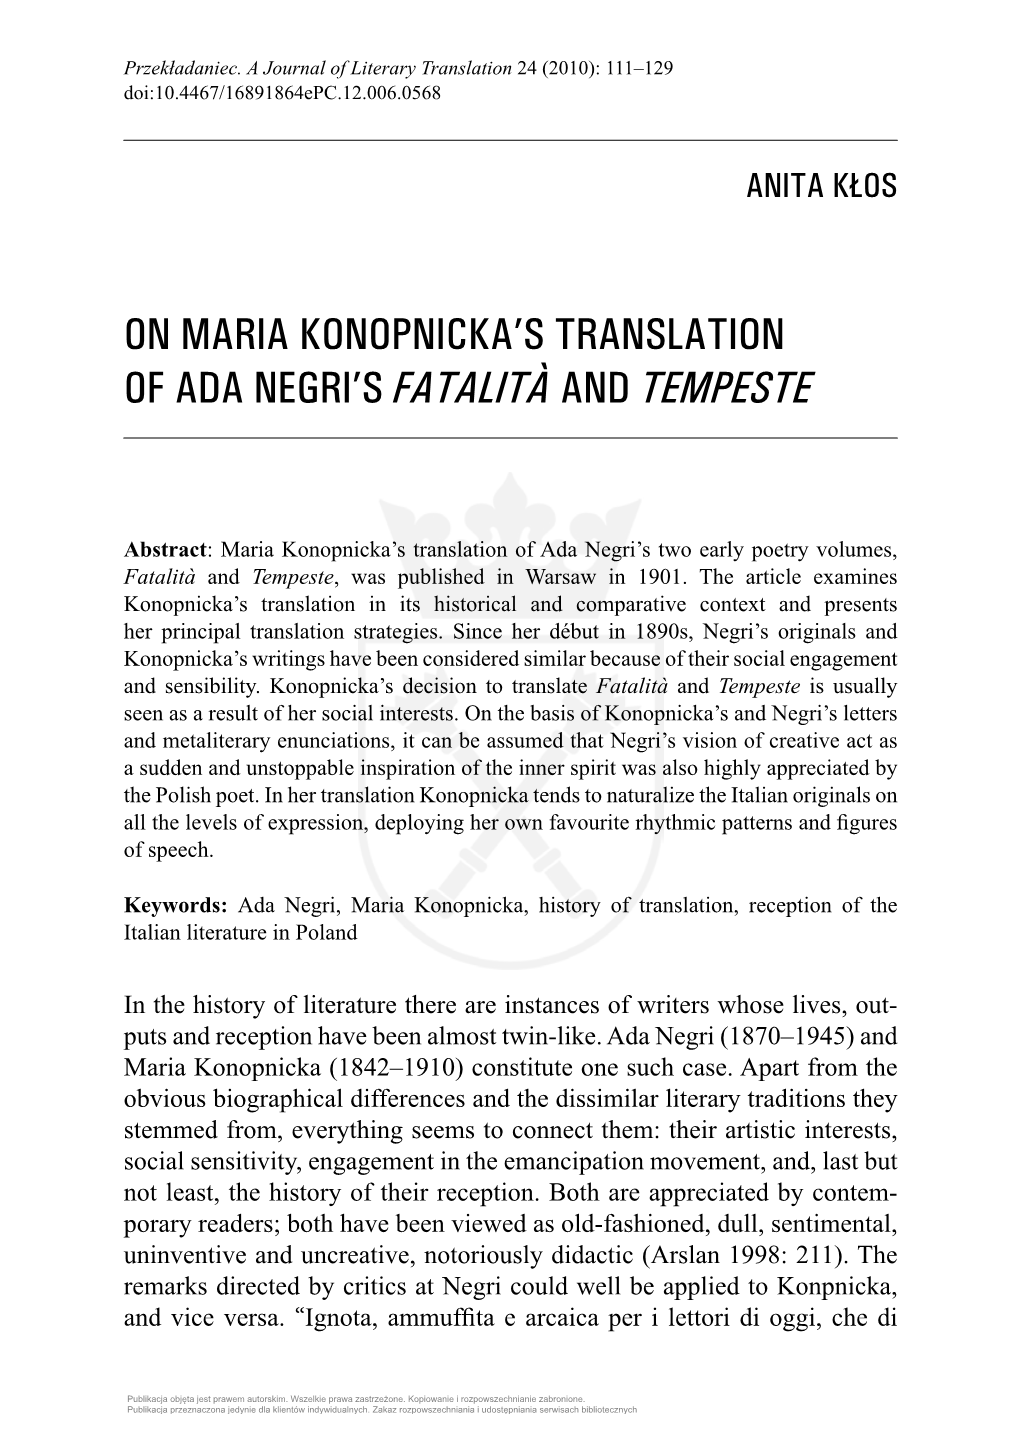 On Maria Konopnicka's Translation of Ada Negri's